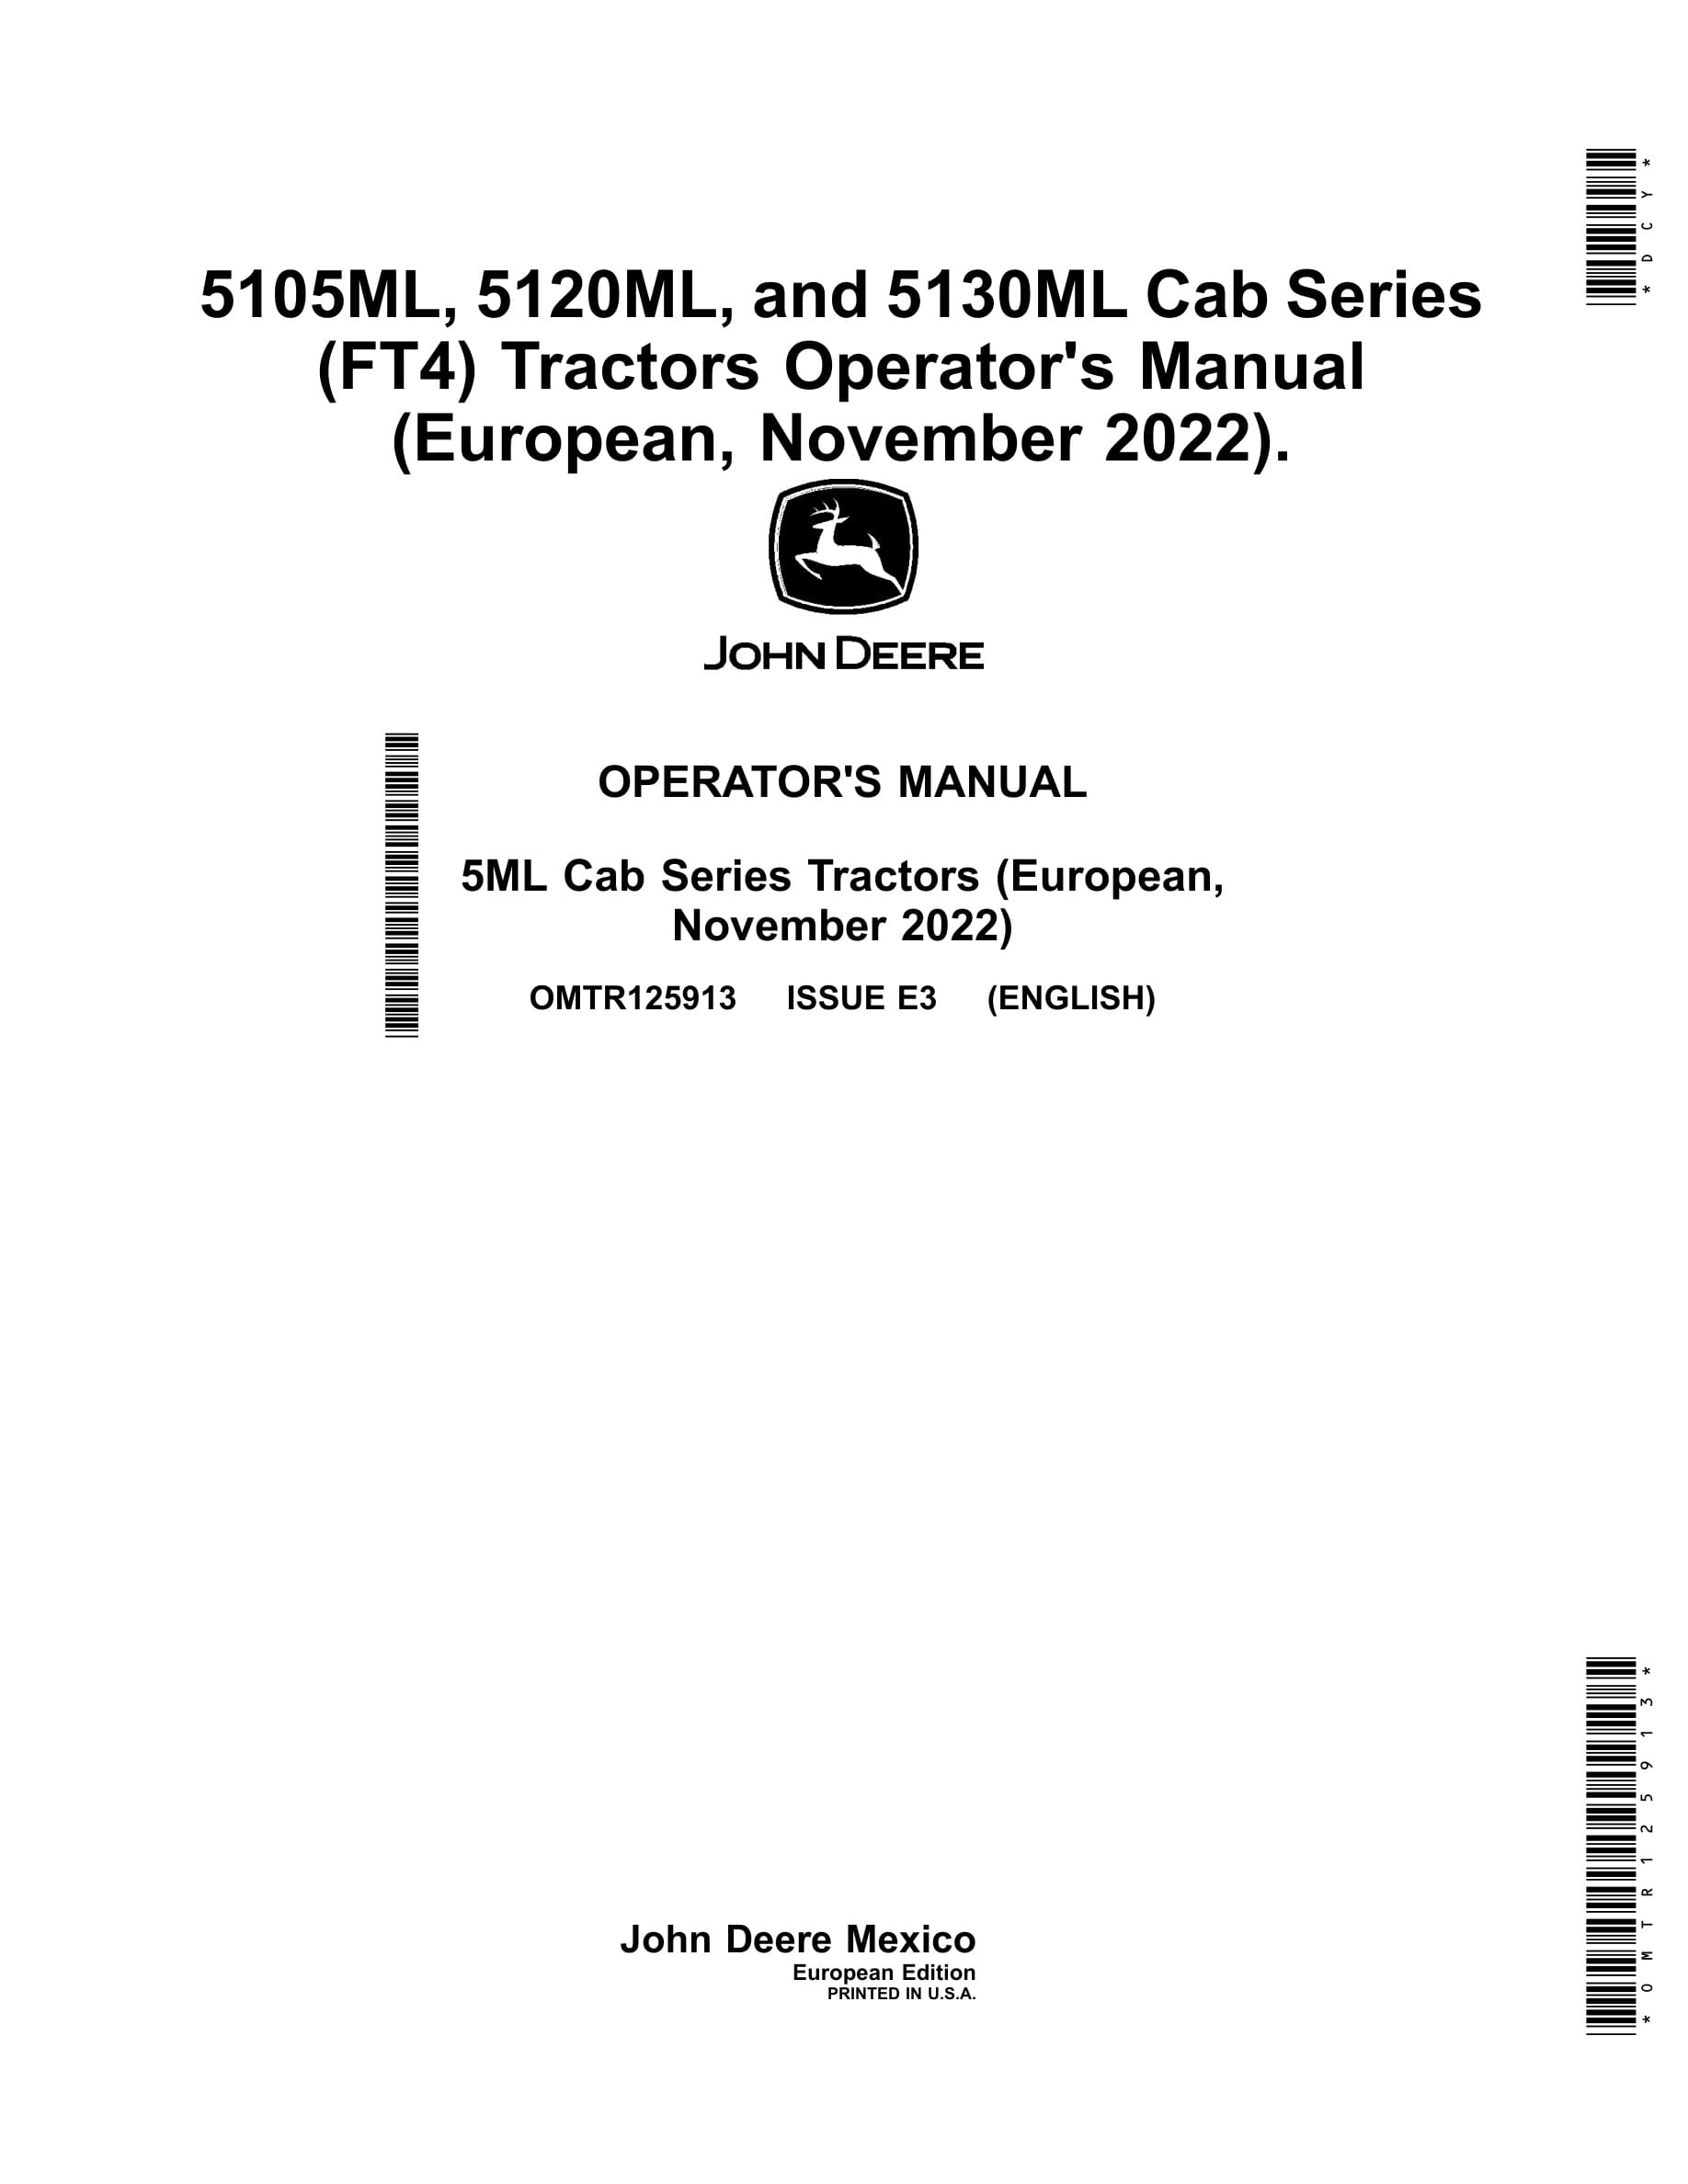 John Deere 5ml Cab Series Tractors Operator Manuals OMTR125913-1